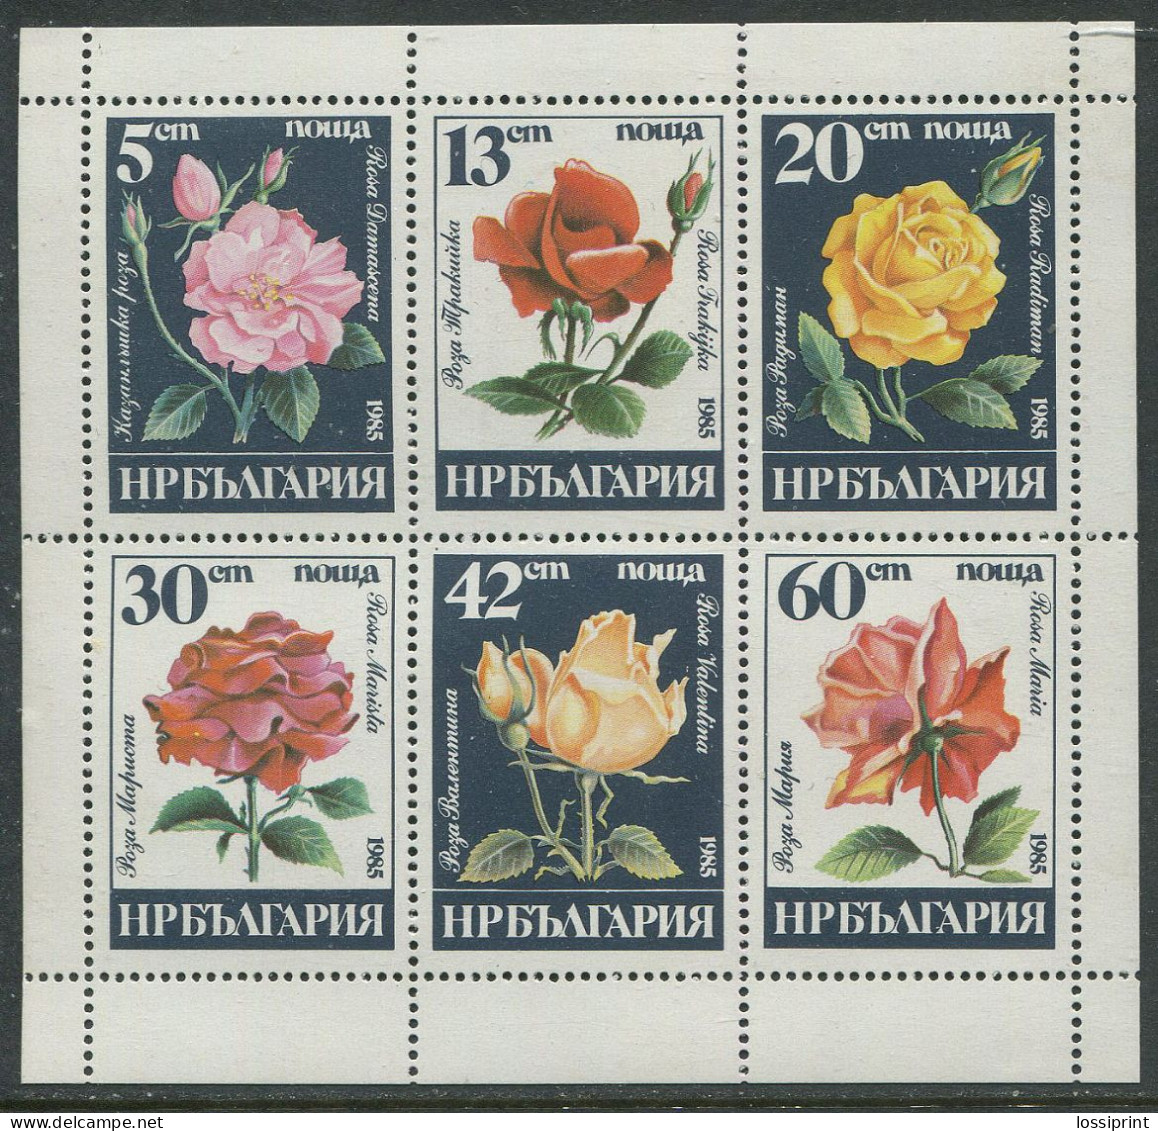 Bulgaria:Unused Block Flowers, Roses, 1985, MNH - Roses